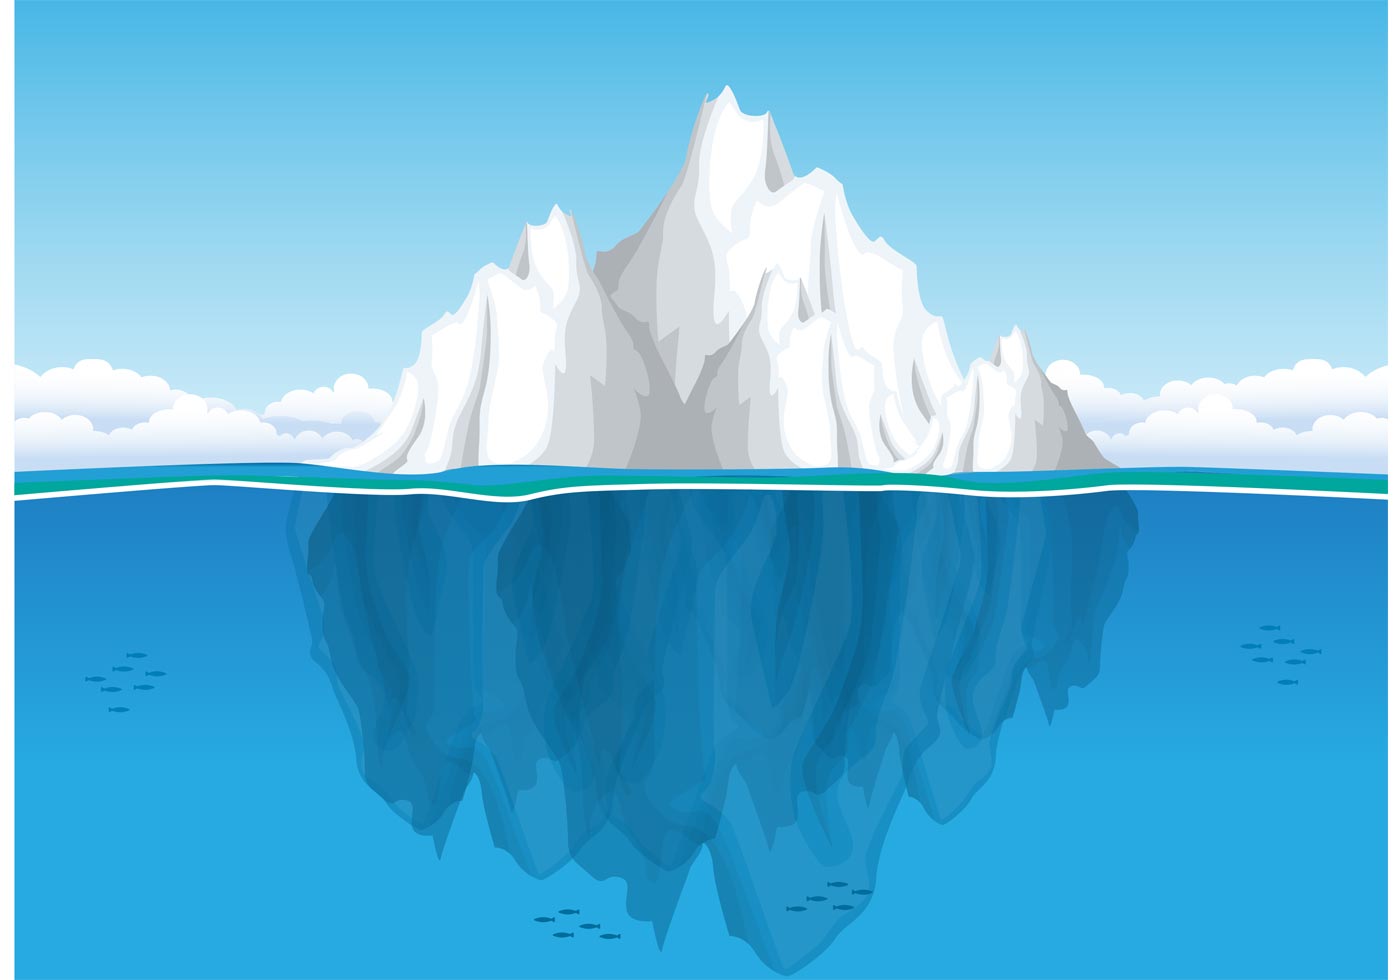 Huge iceberg in Newfoundland drawing large crowds